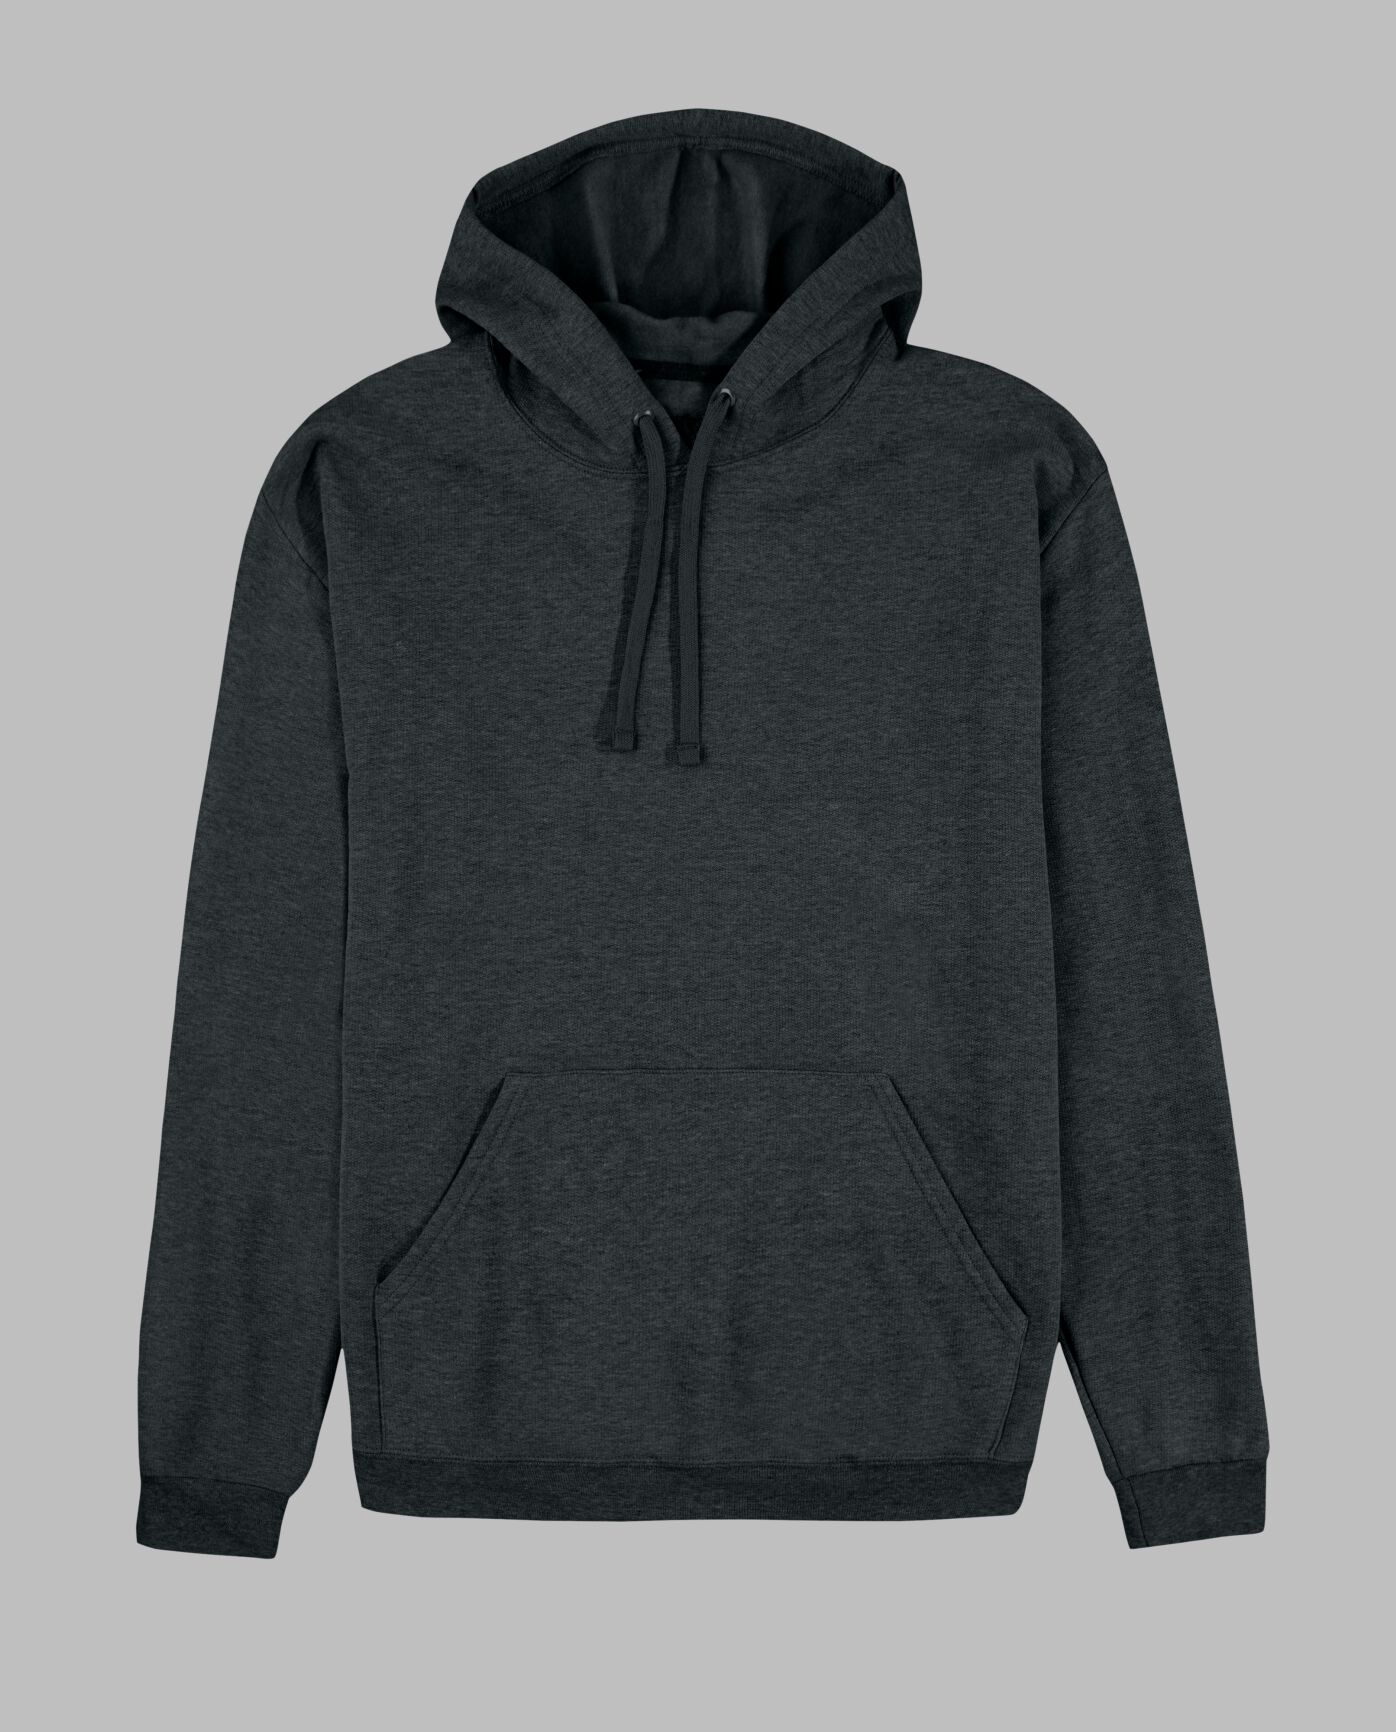 Men's EverSoft Pullover Hoodie Sweatshirt, Pack